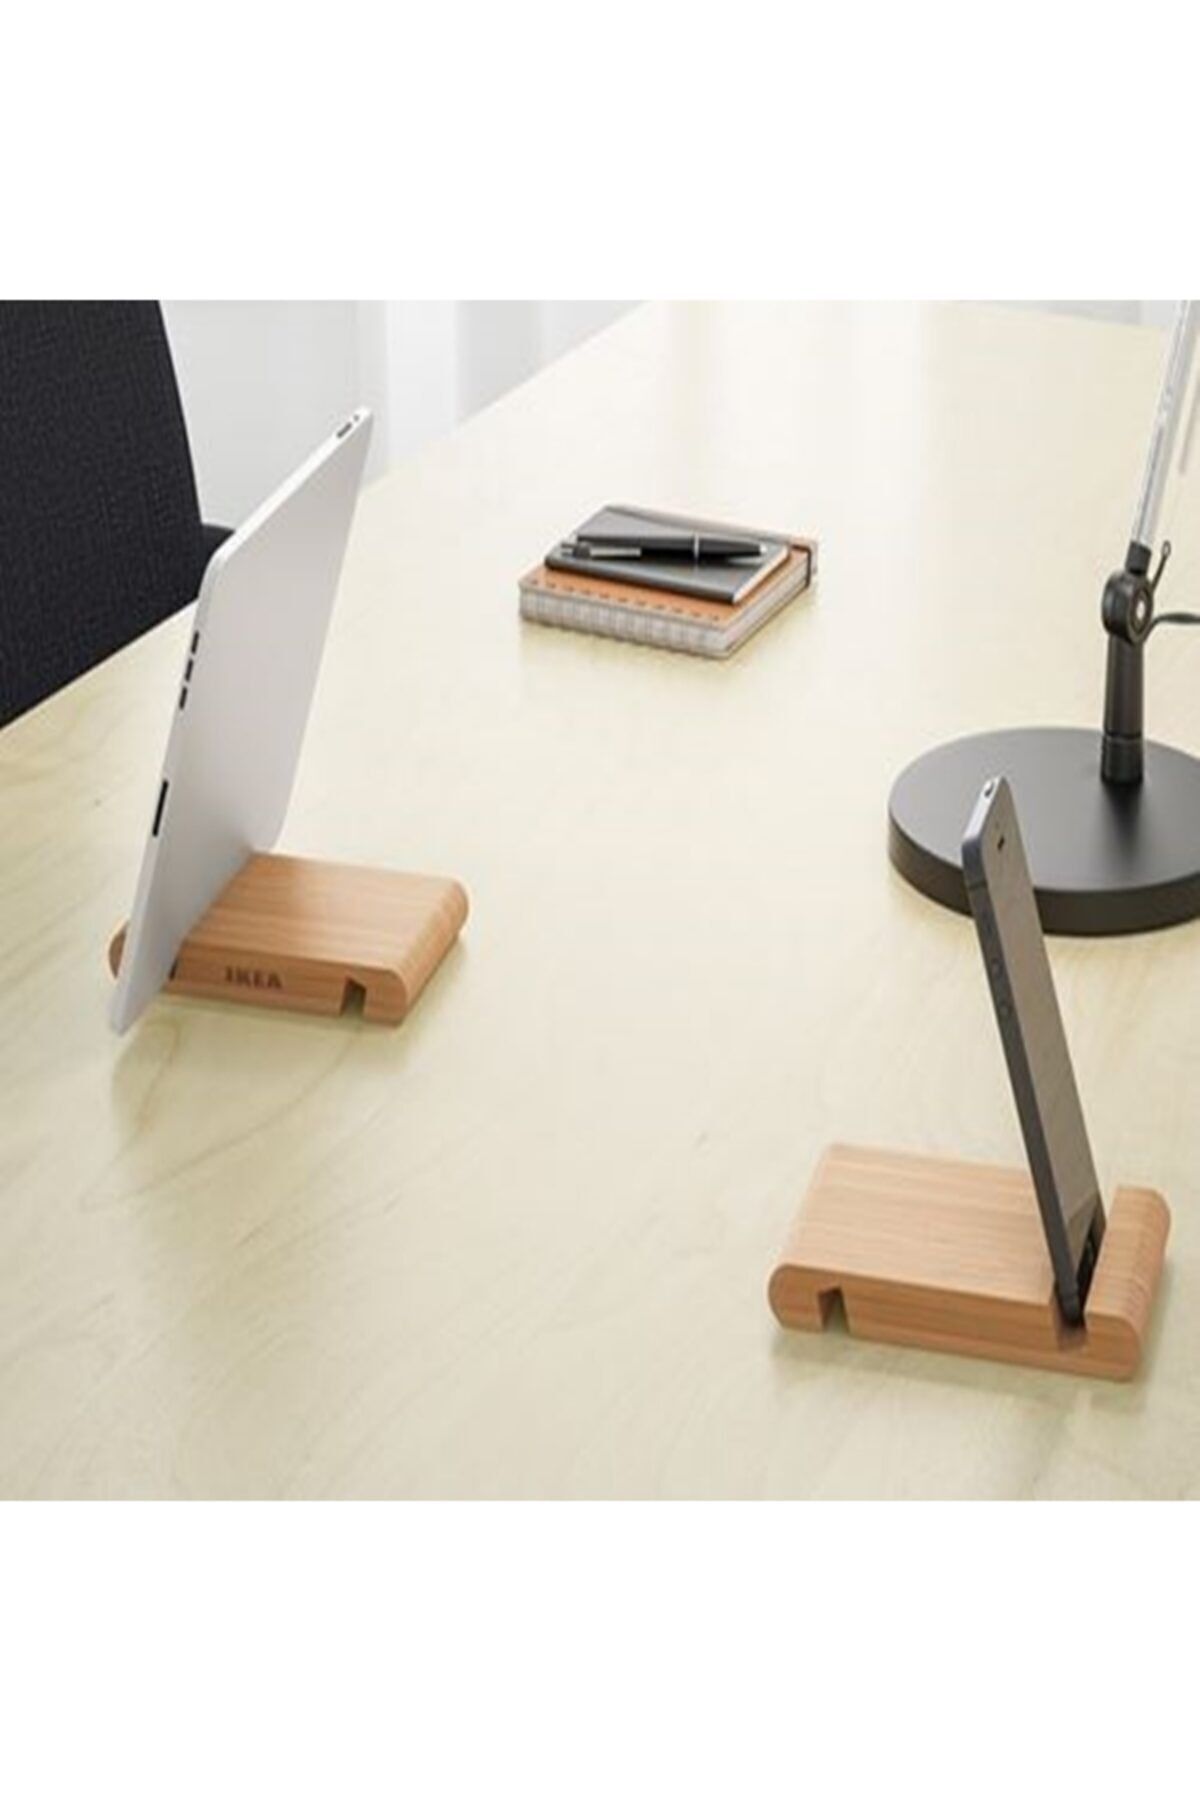 IKEA Bambu Bergenes Telefon Tablet Tutucu Stand